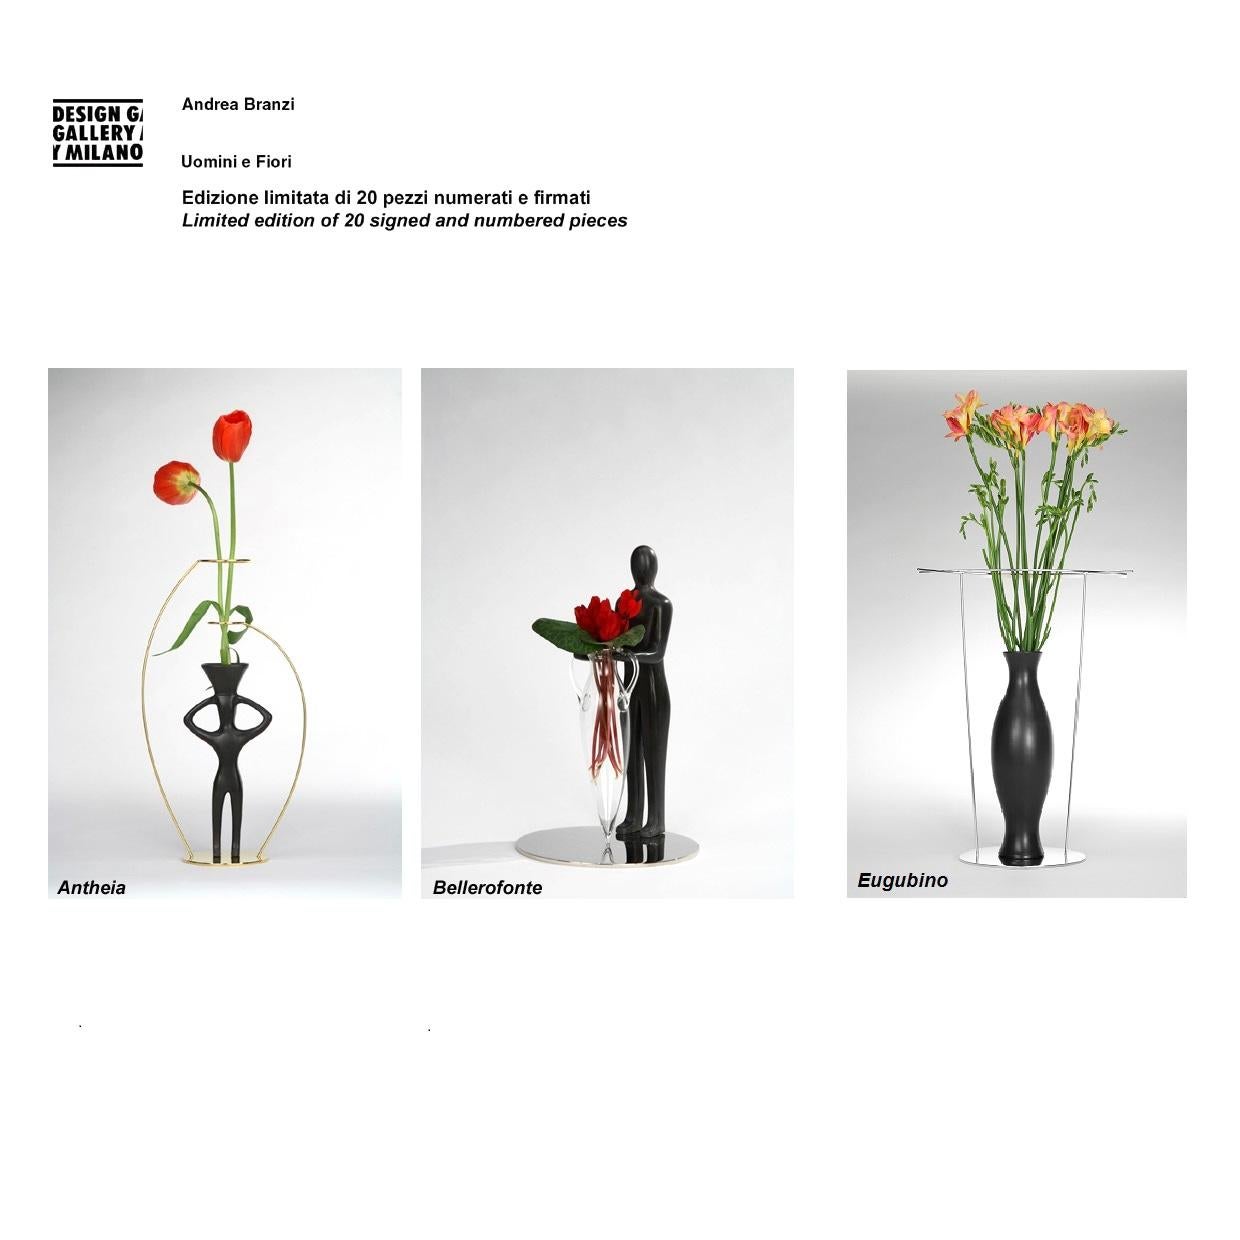 Andrea BRANZI (né en 1938)
Vase Bellerofonte, 2006
Edition Design/One Gallery Milano de 20 exemplaires, épuisée
Vase de la collection Uomini e Fiori, personnage en 